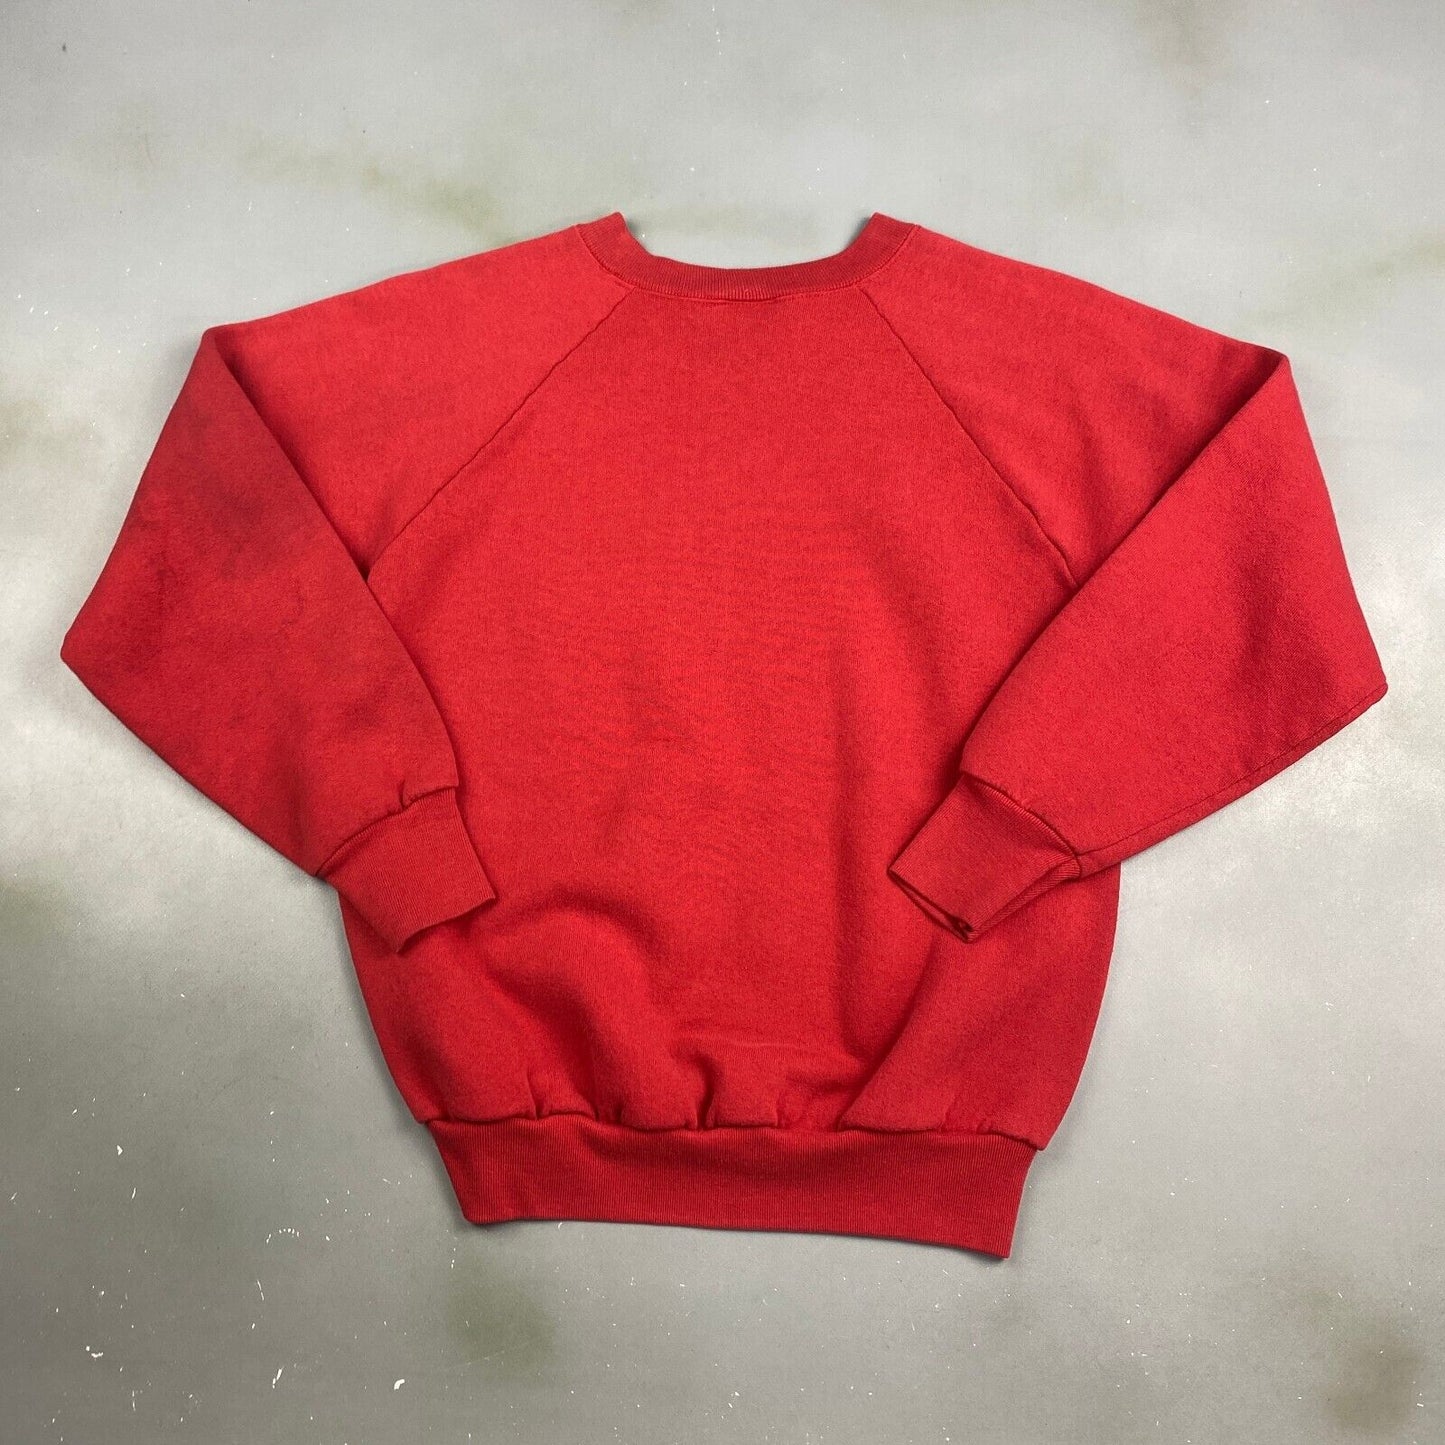 VINTAGE 90s Blank Red Raglan Crewneck Sweater sz Small Adult Men